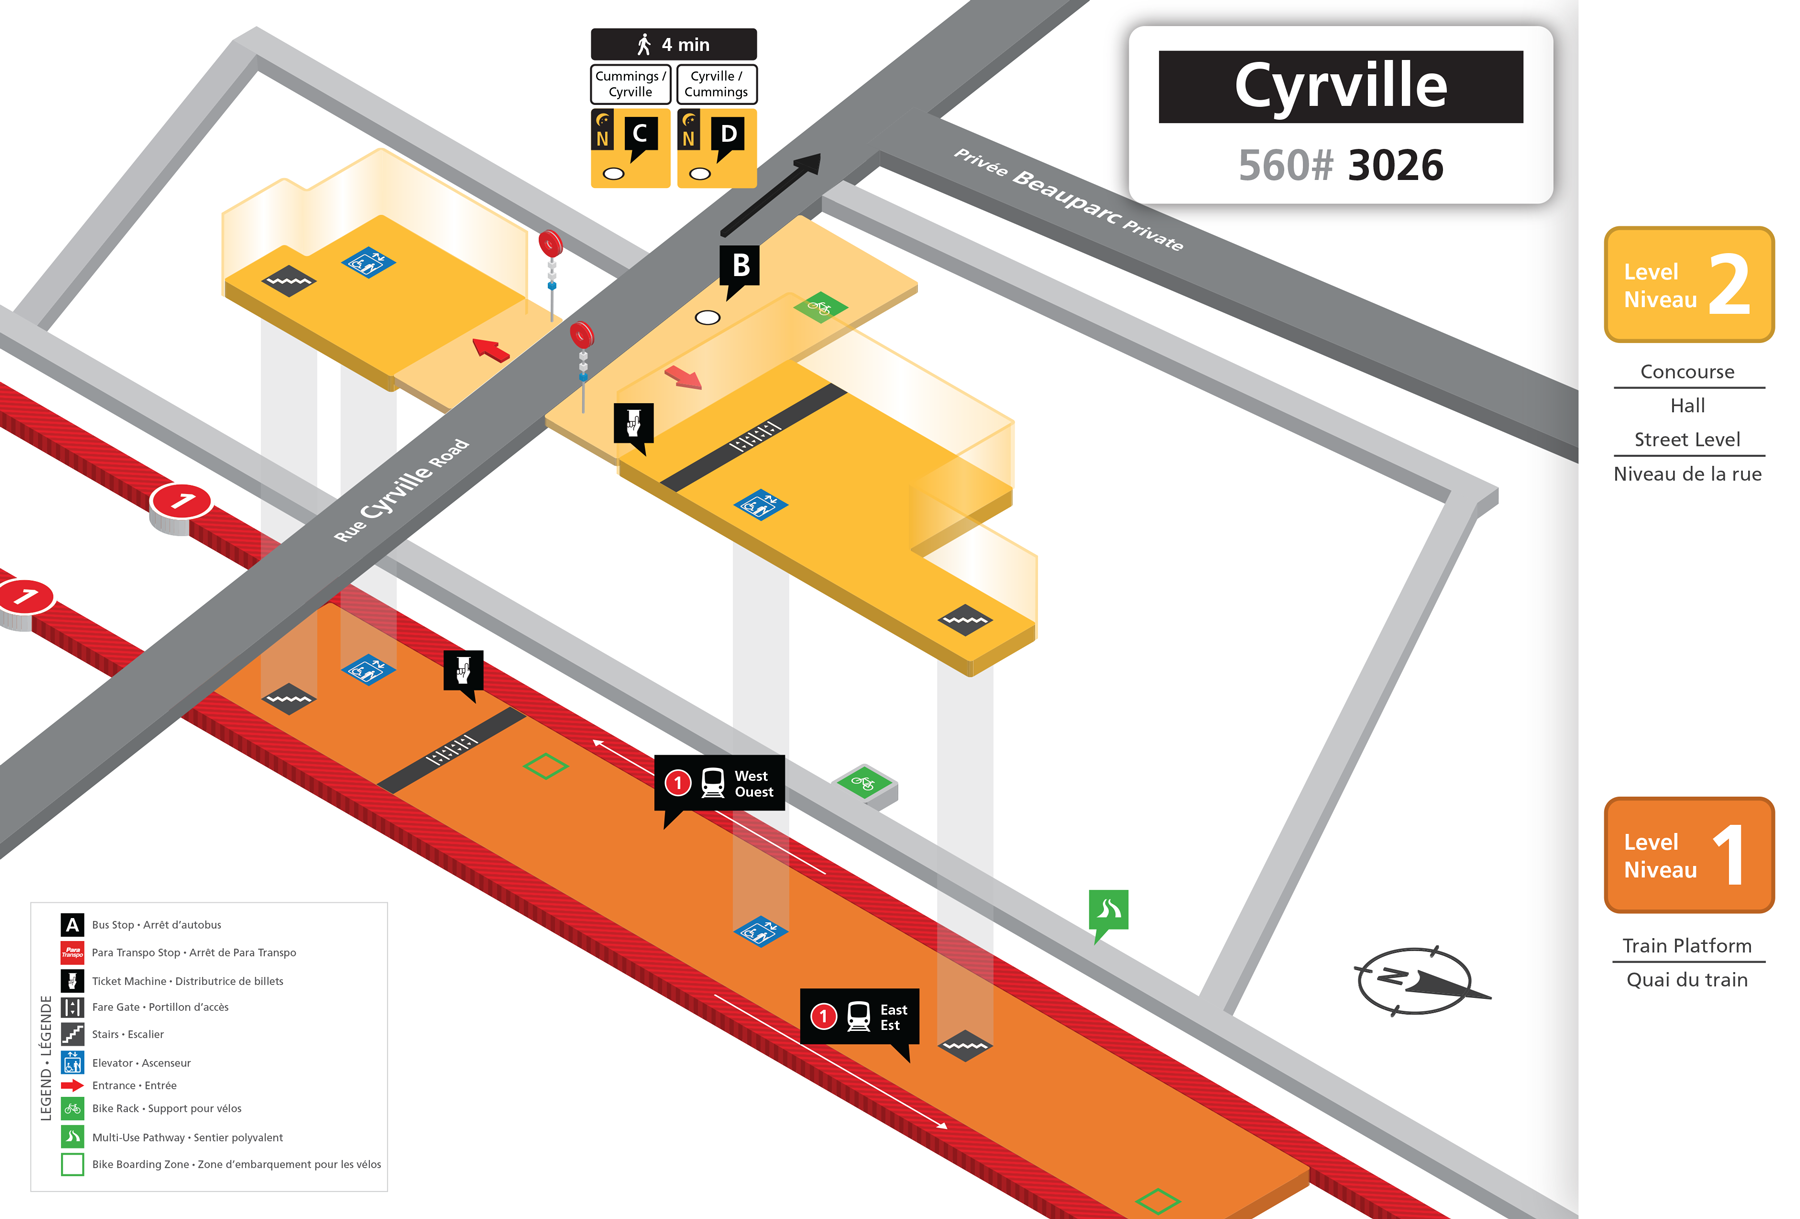 Cyrville station layout